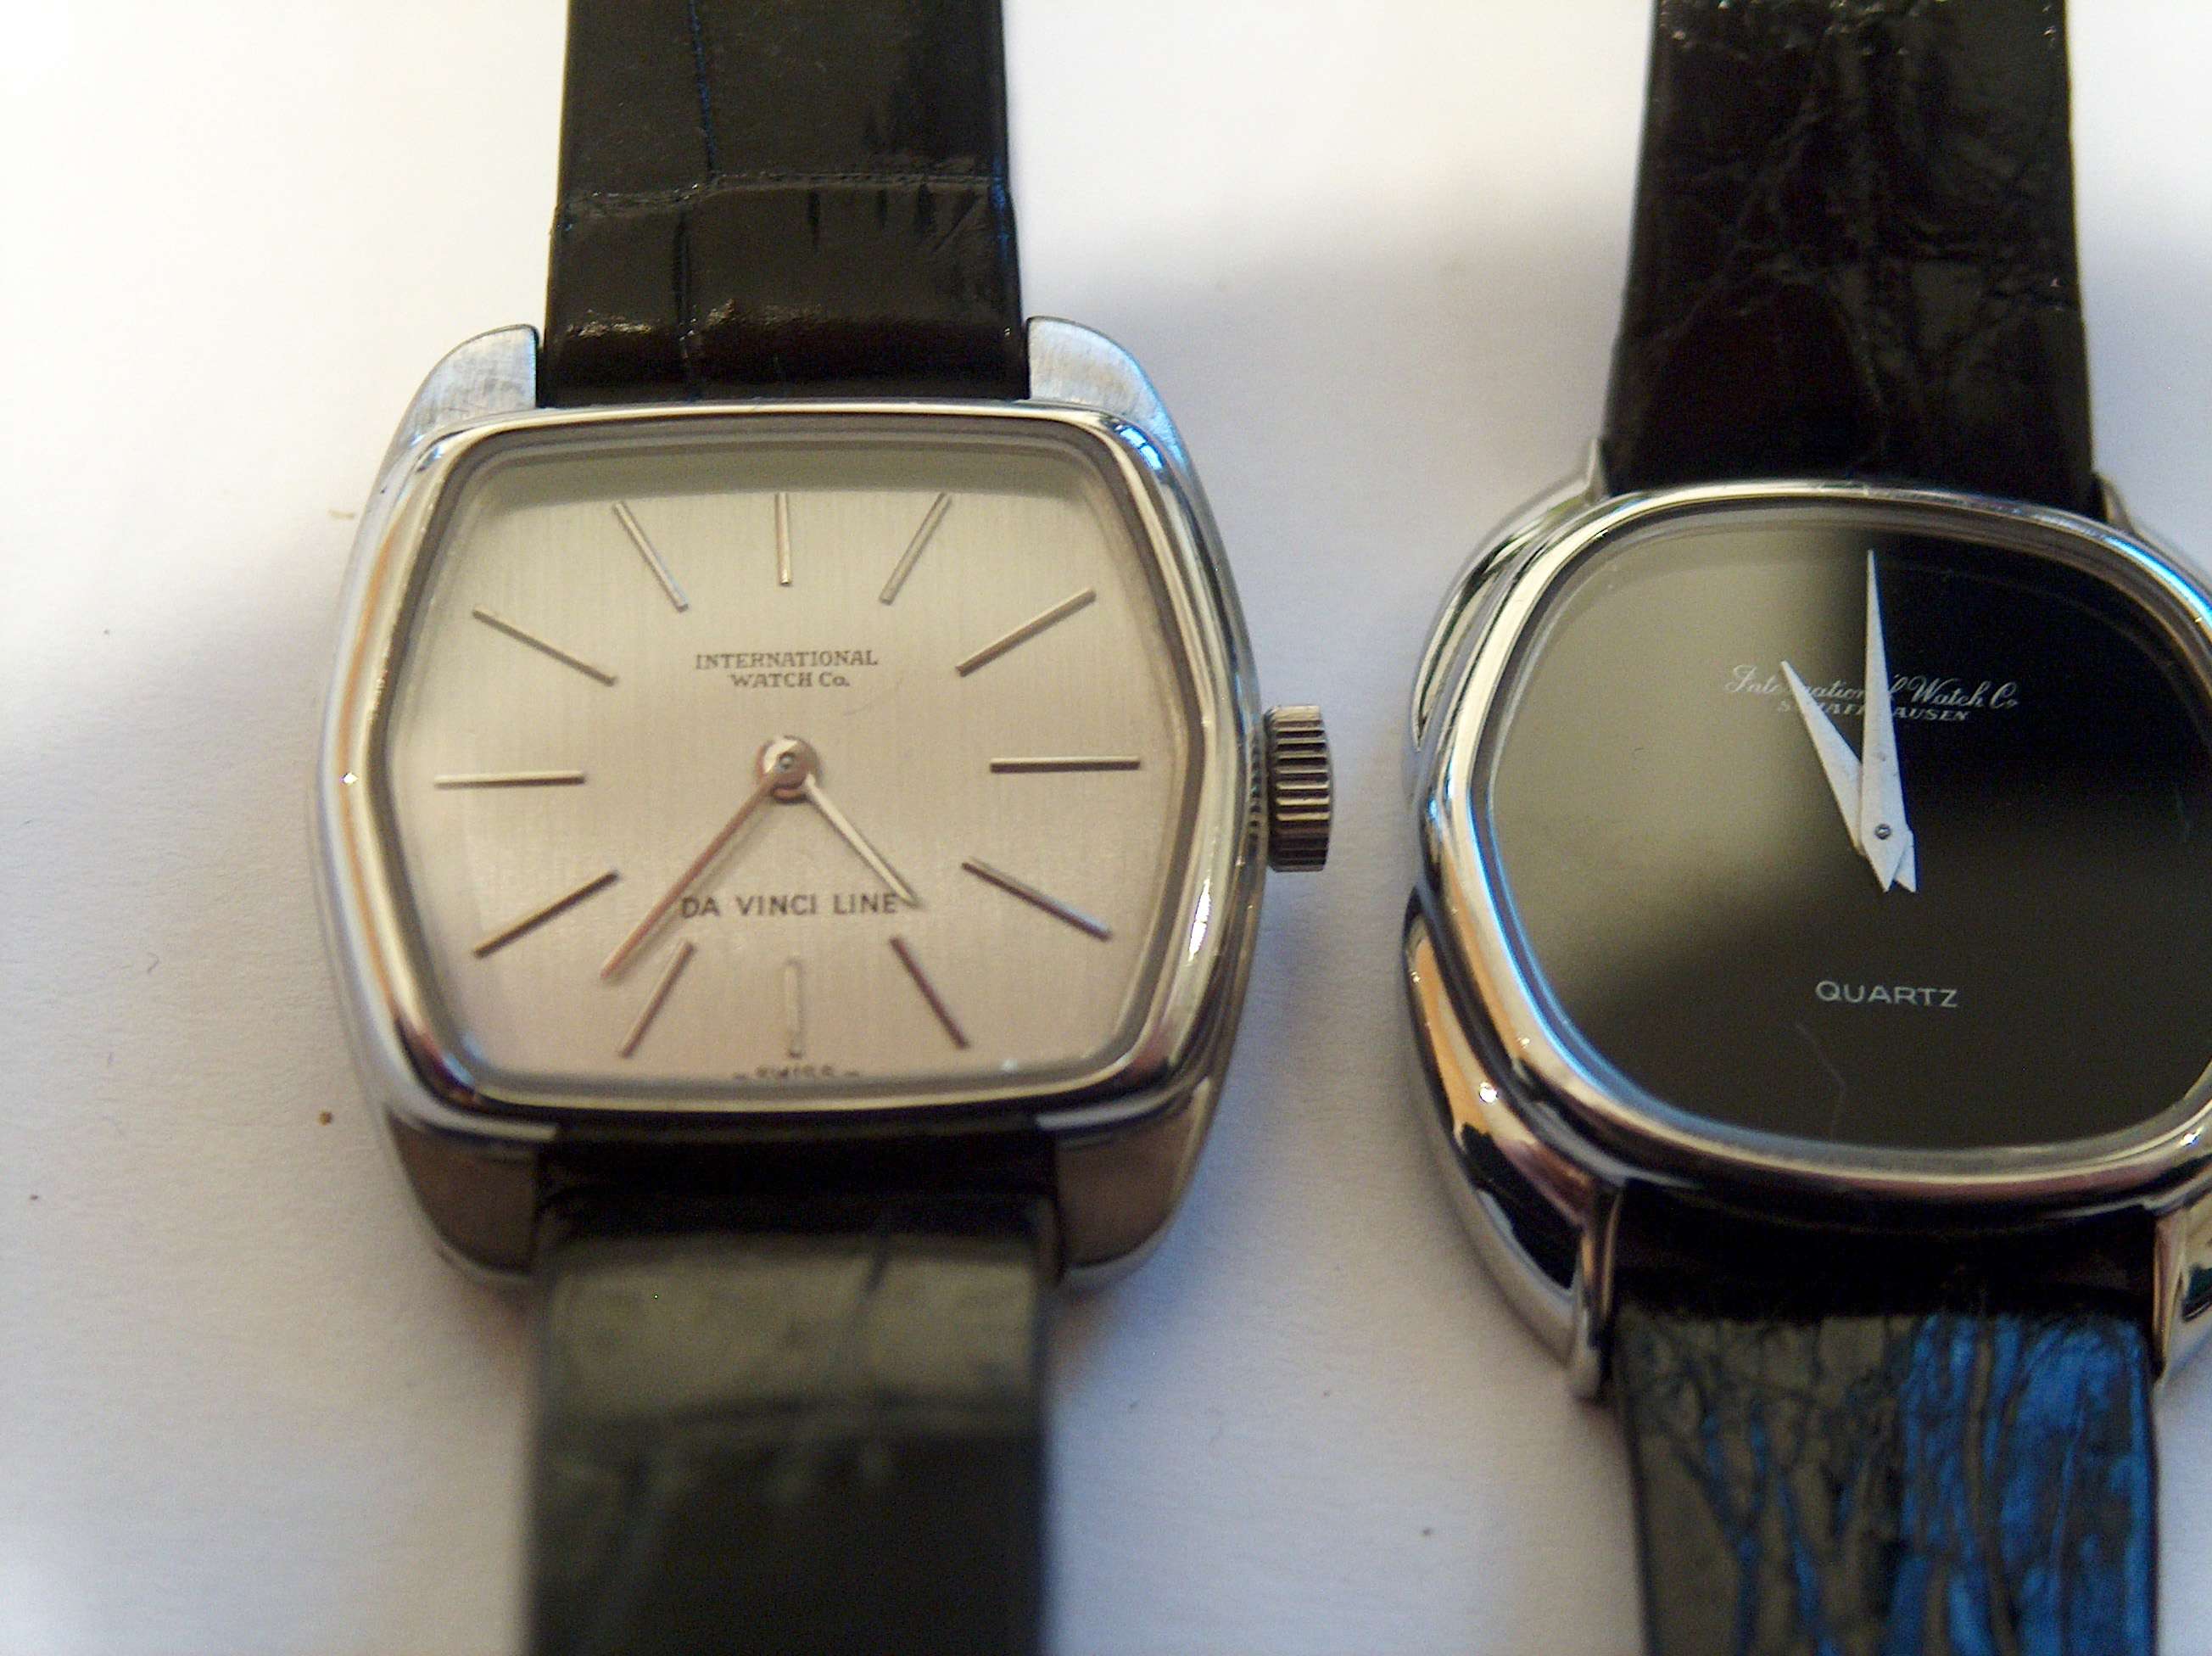 Imitation Baume Mercier Watches